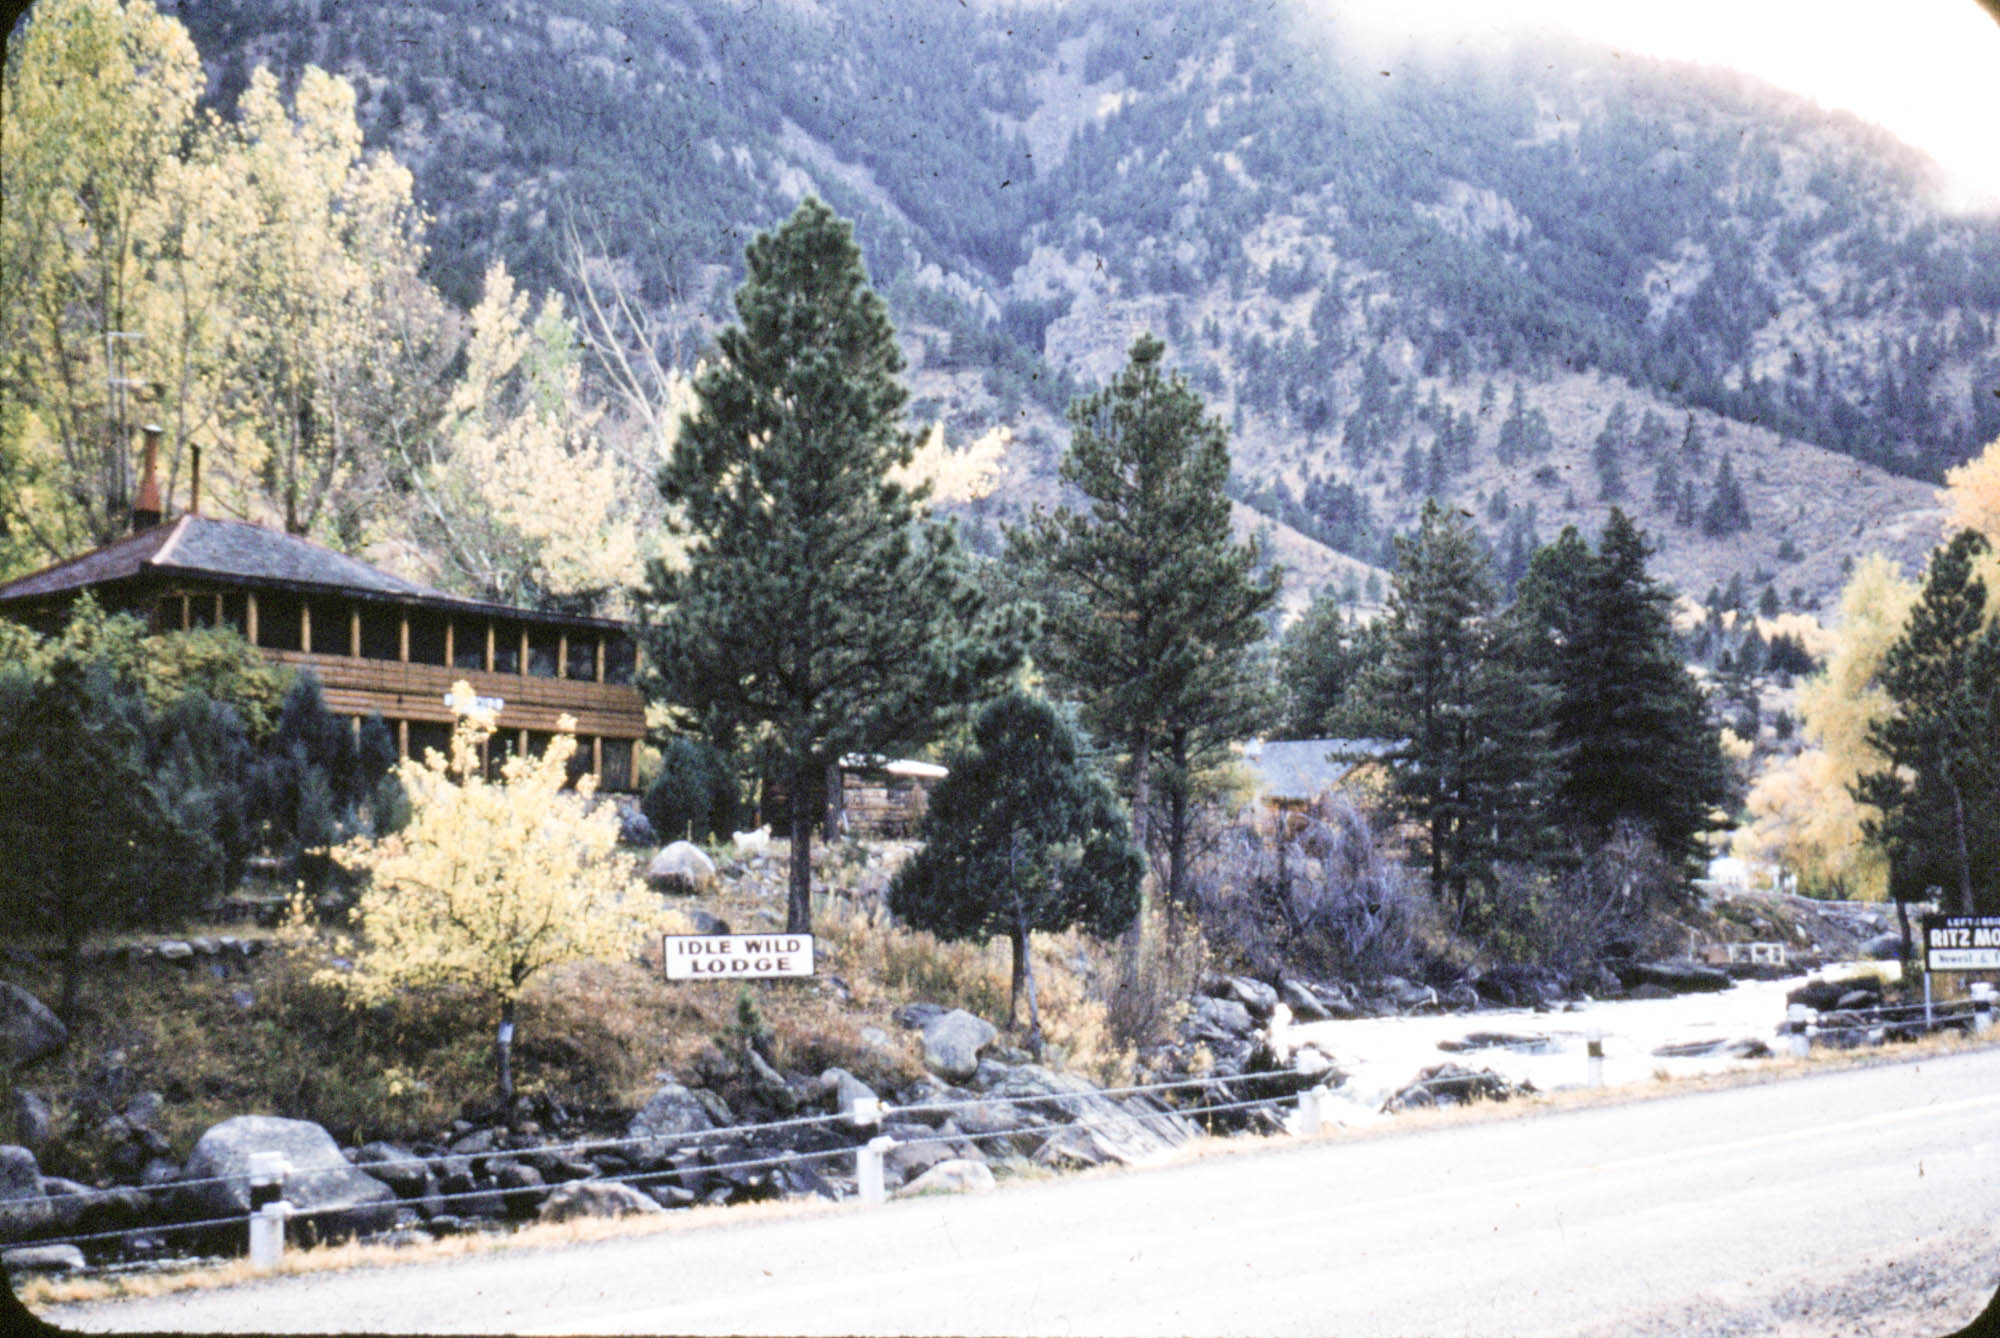 Idlewild Lodge - idlewildlodge.github.io - Circa 1956 - View Of Idlewild Lodge With Ritz Motel Sign At Right